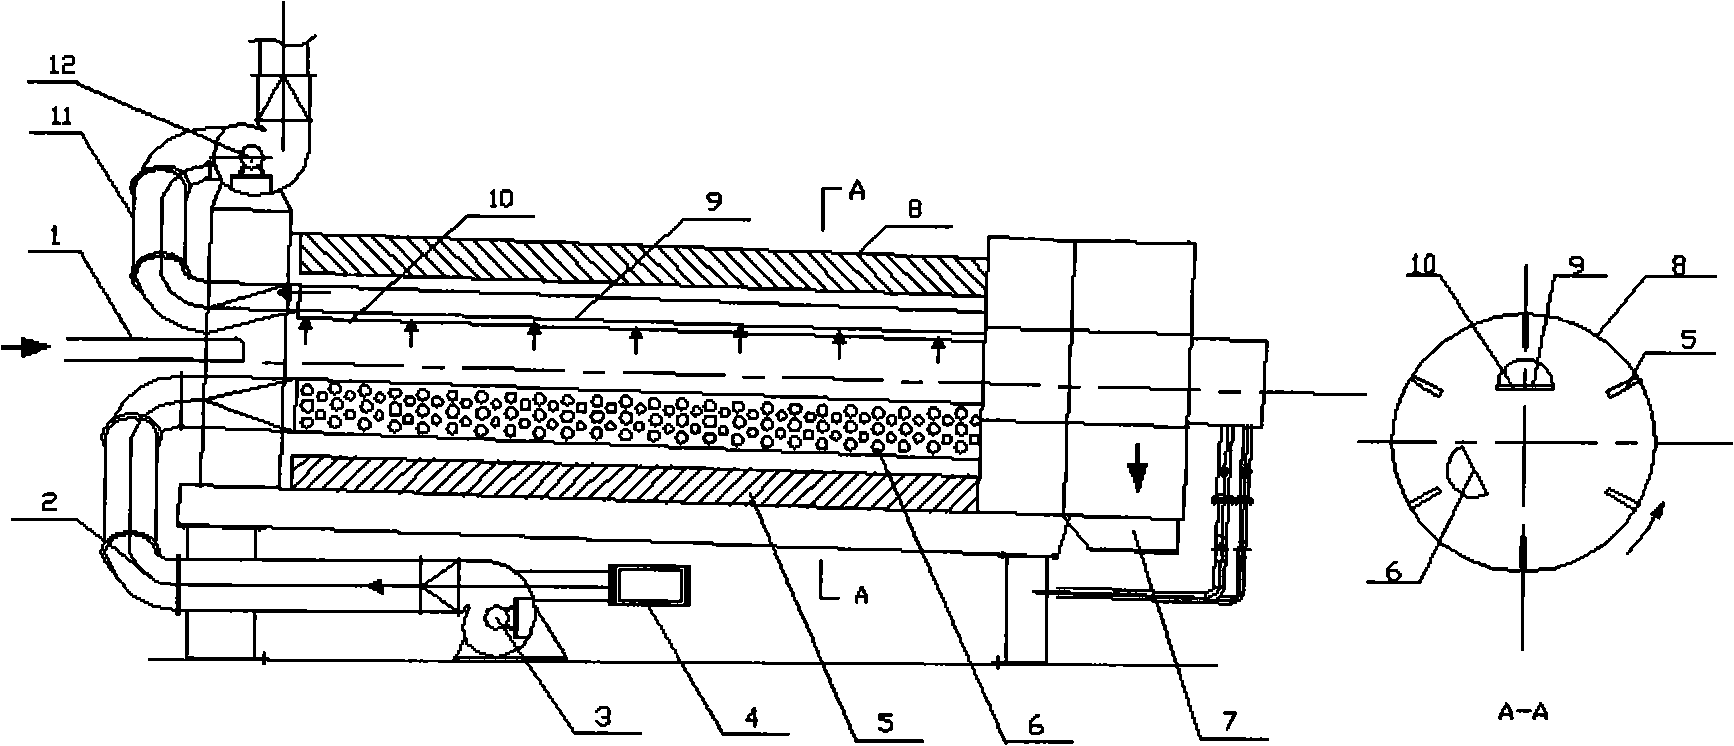 Cross-flow type cylinder tobacco dryer